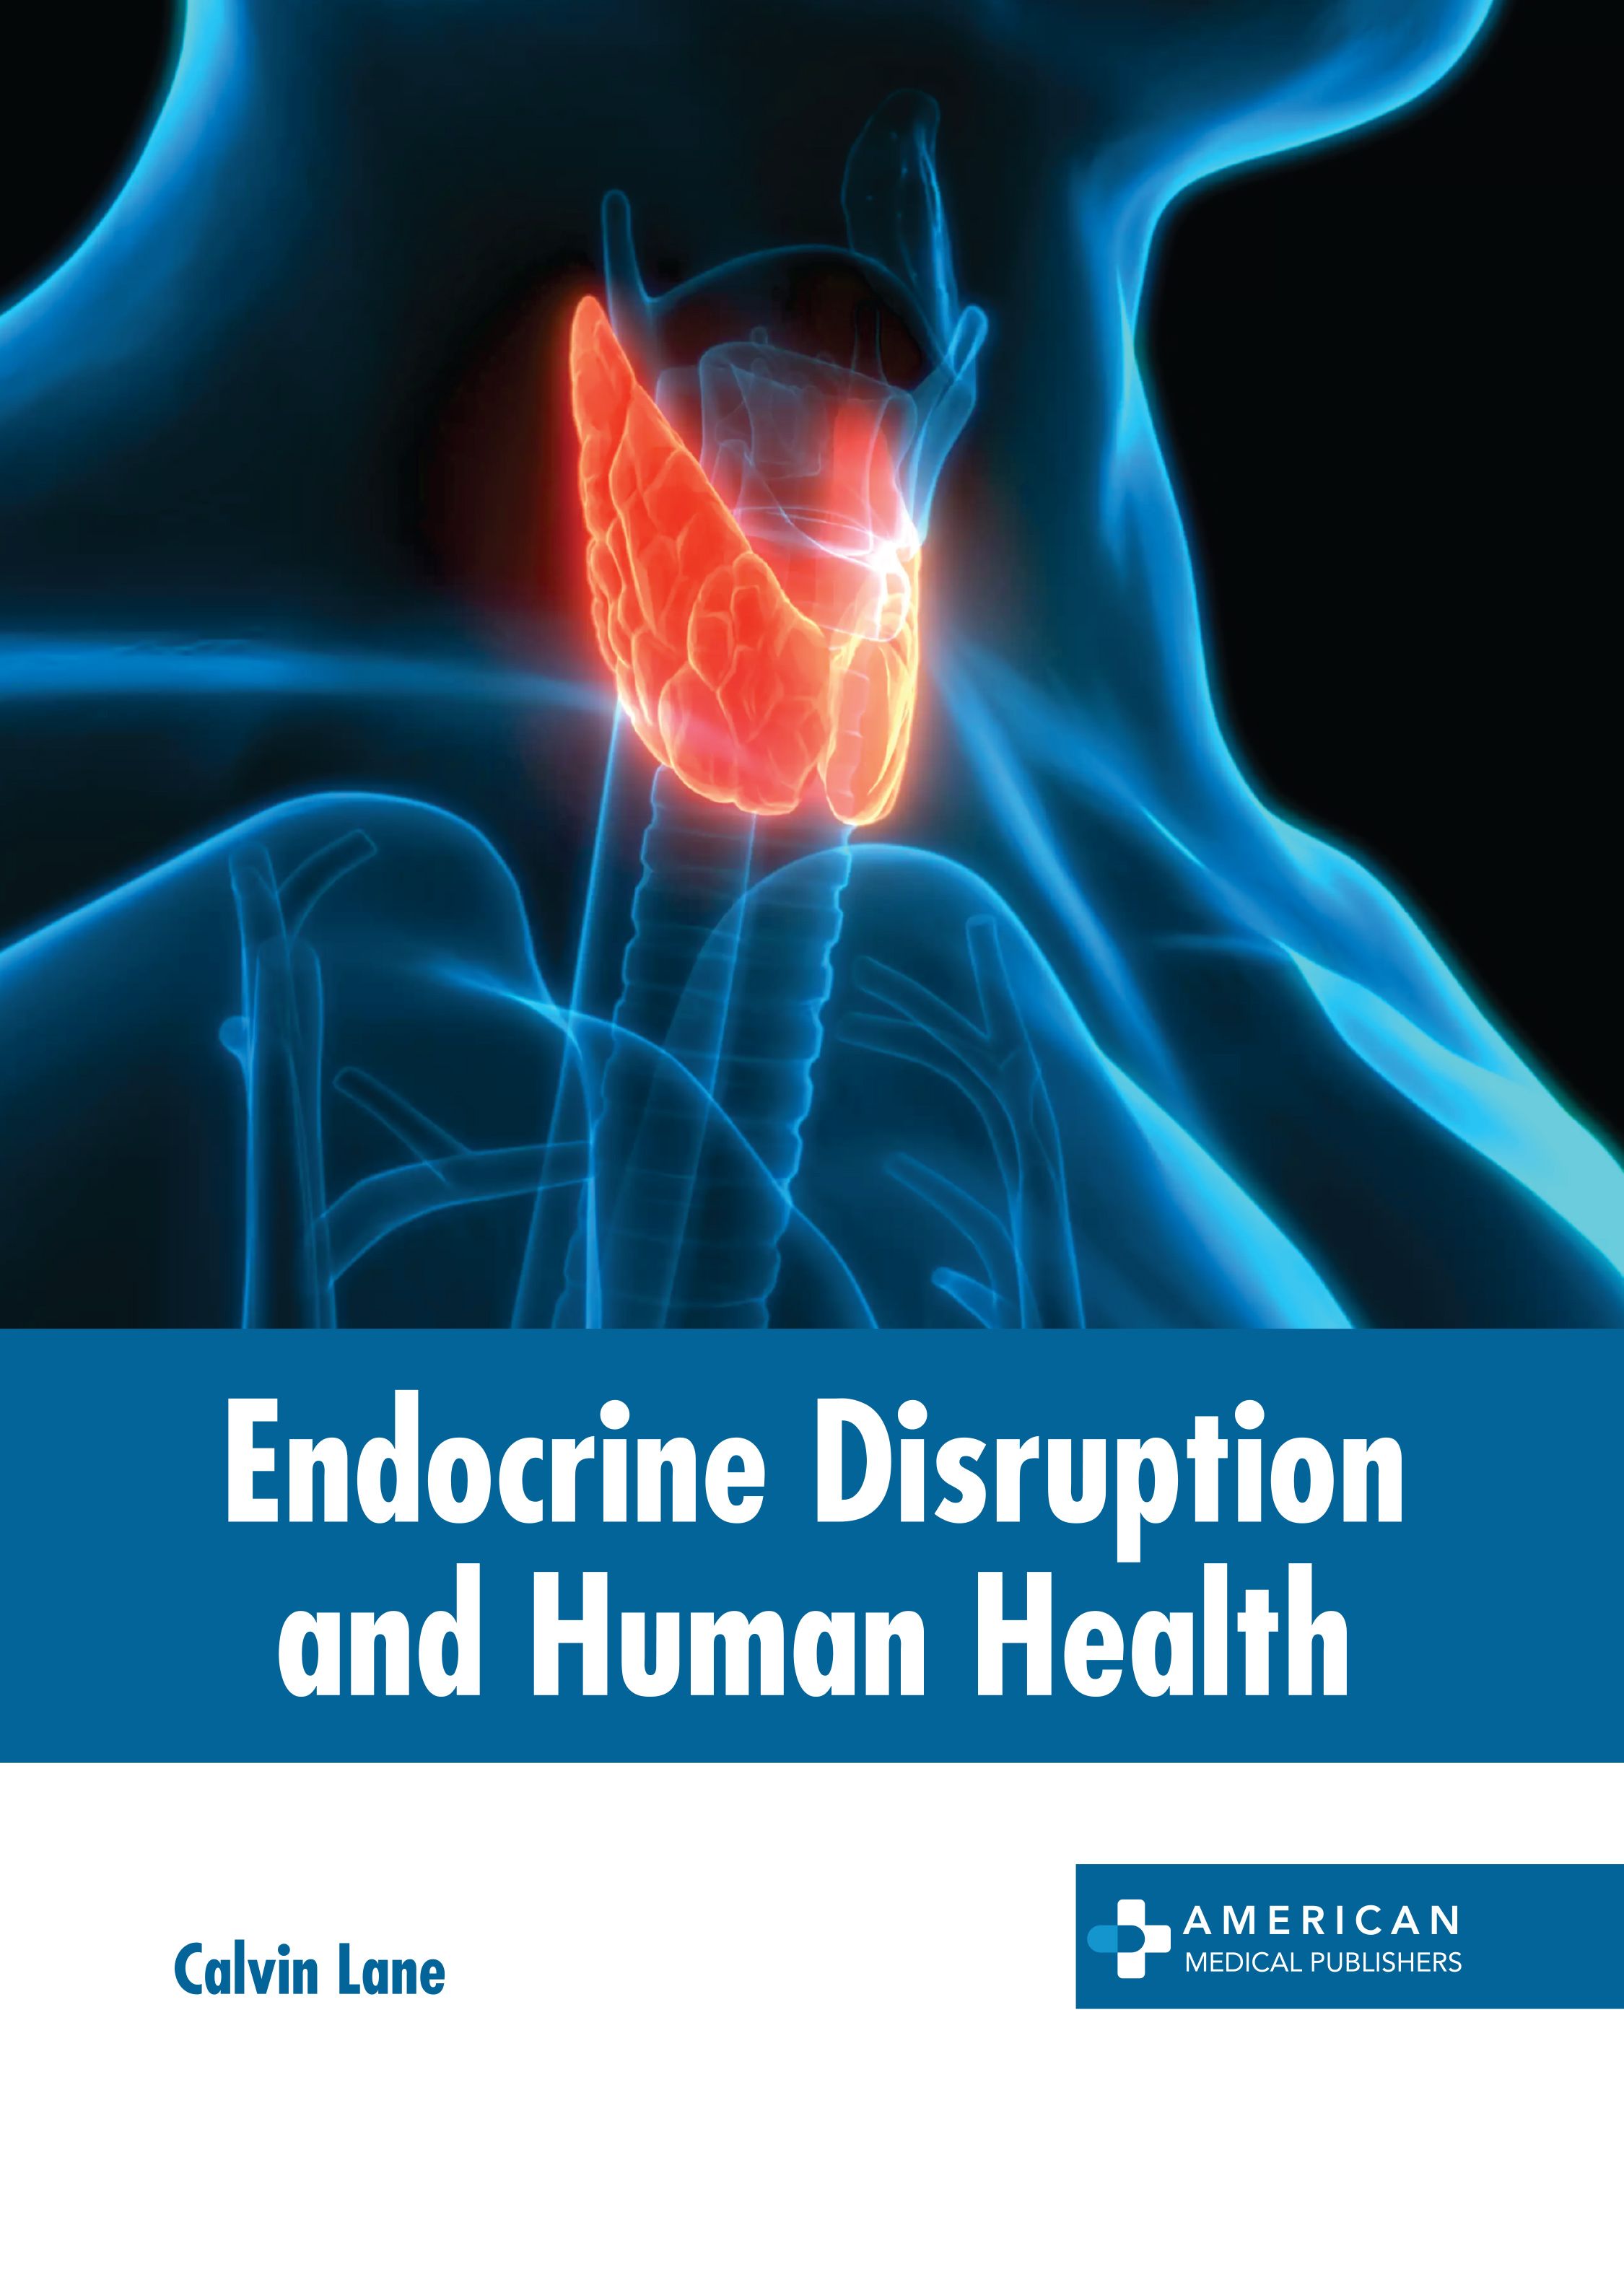 ENDOCRINE DISRUPTION AND HUMAN HEALTH